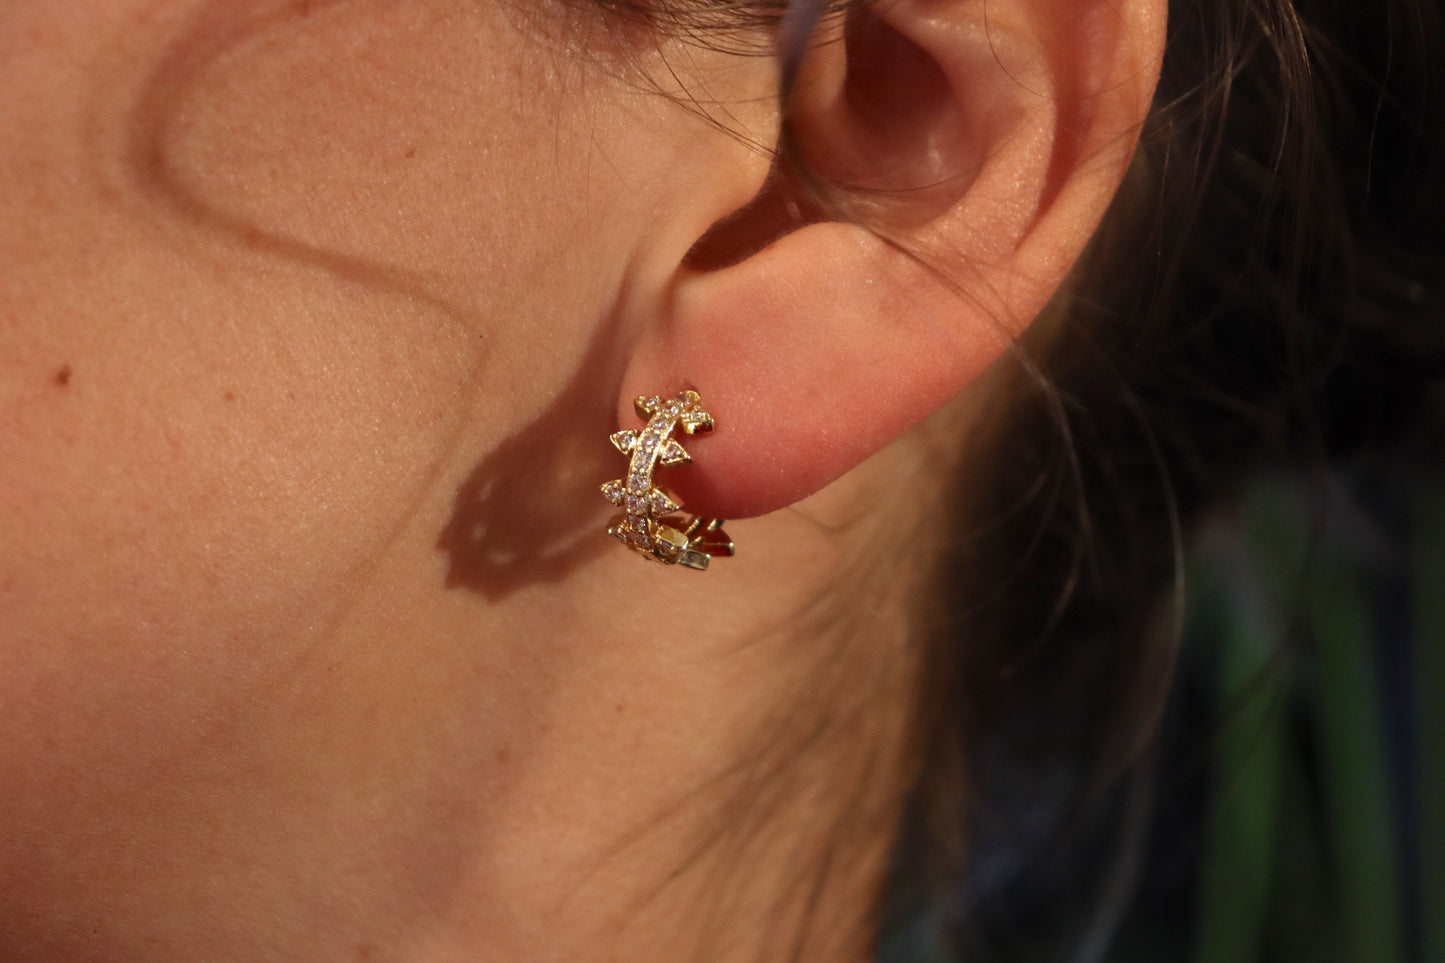 Brass Huggie Earrings With Cubic Zirconi & Spikes. Small hoop earrings with spikes worn on an ear. 